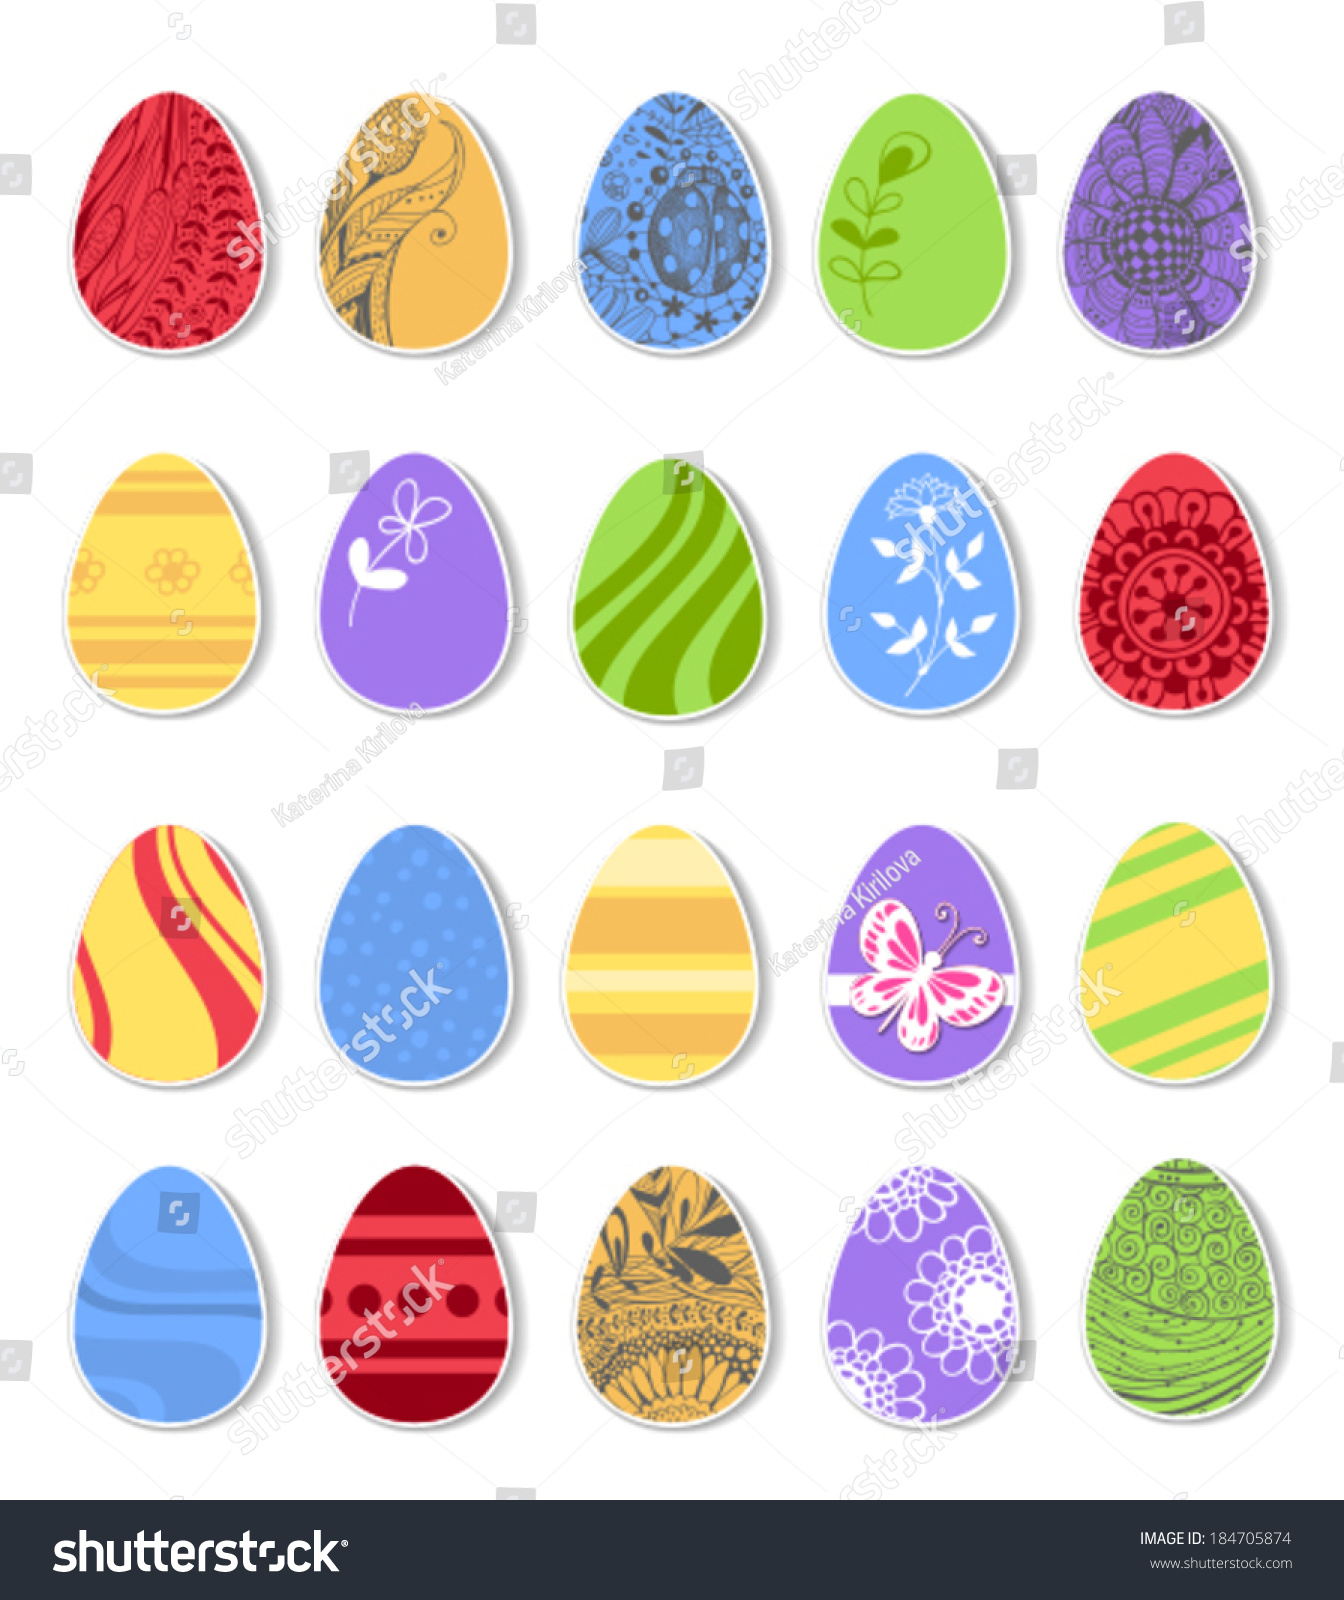 paper easter eggs